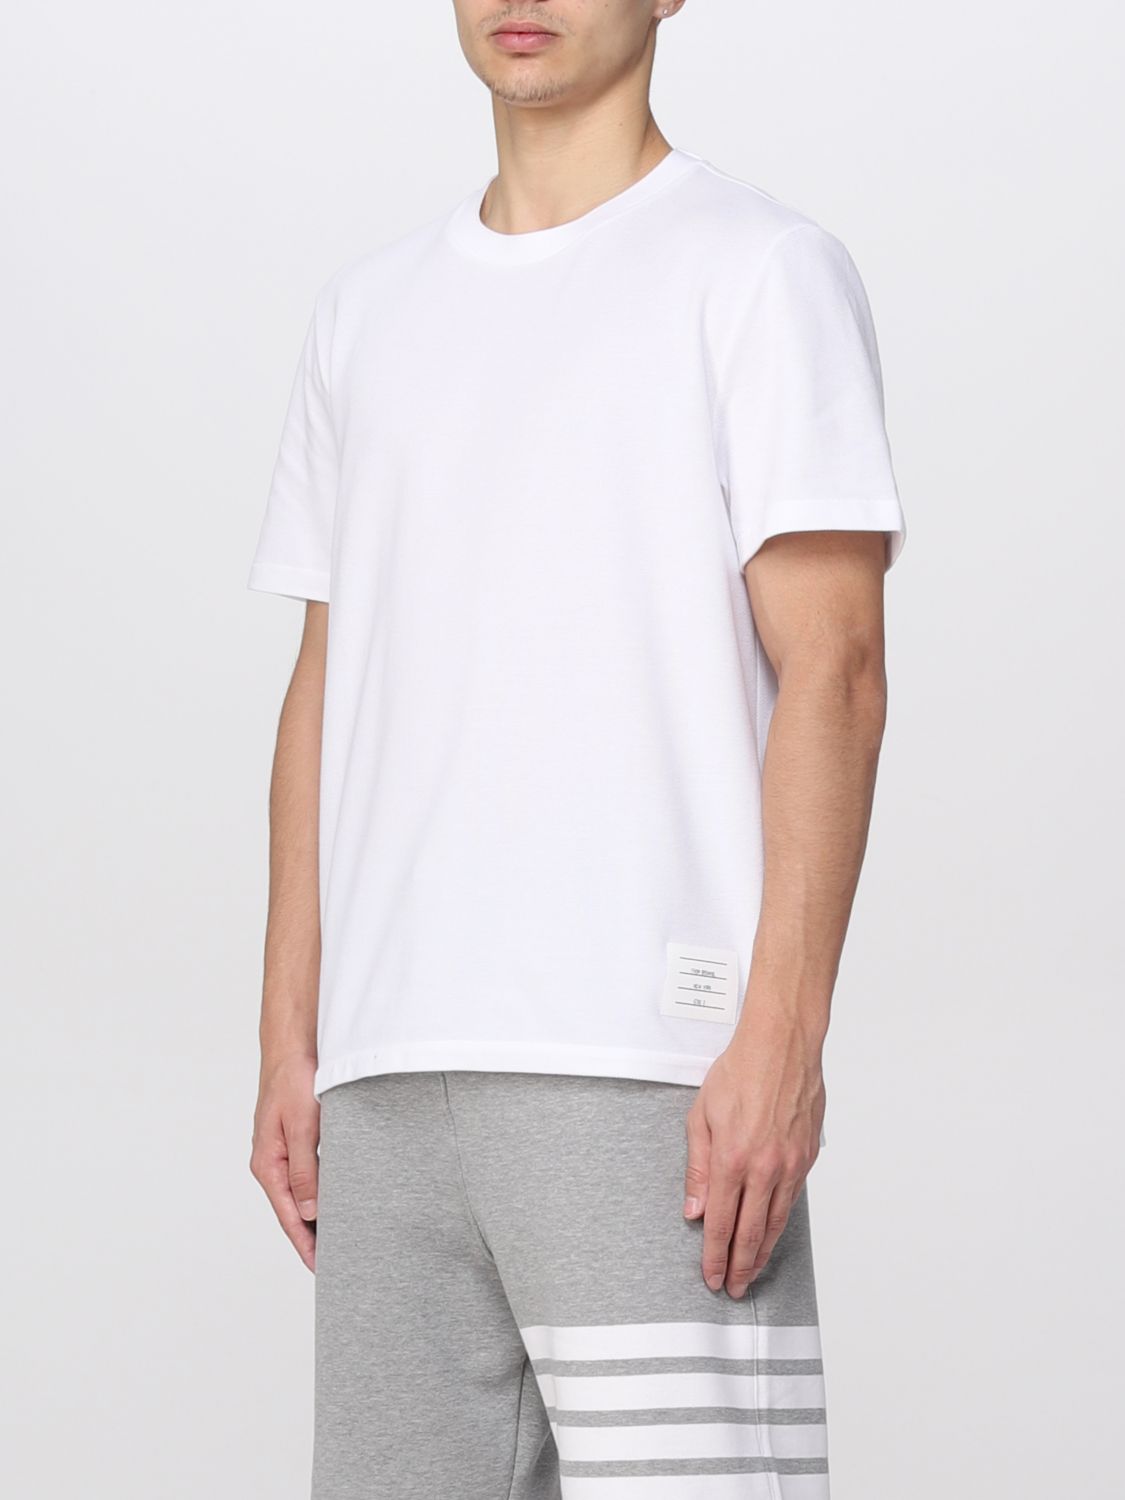 THOM BROWNE: Camiseta para hombre, Blanco | Camiseta Thom Browne MJS056A00050 en línea GIGLIO.COM